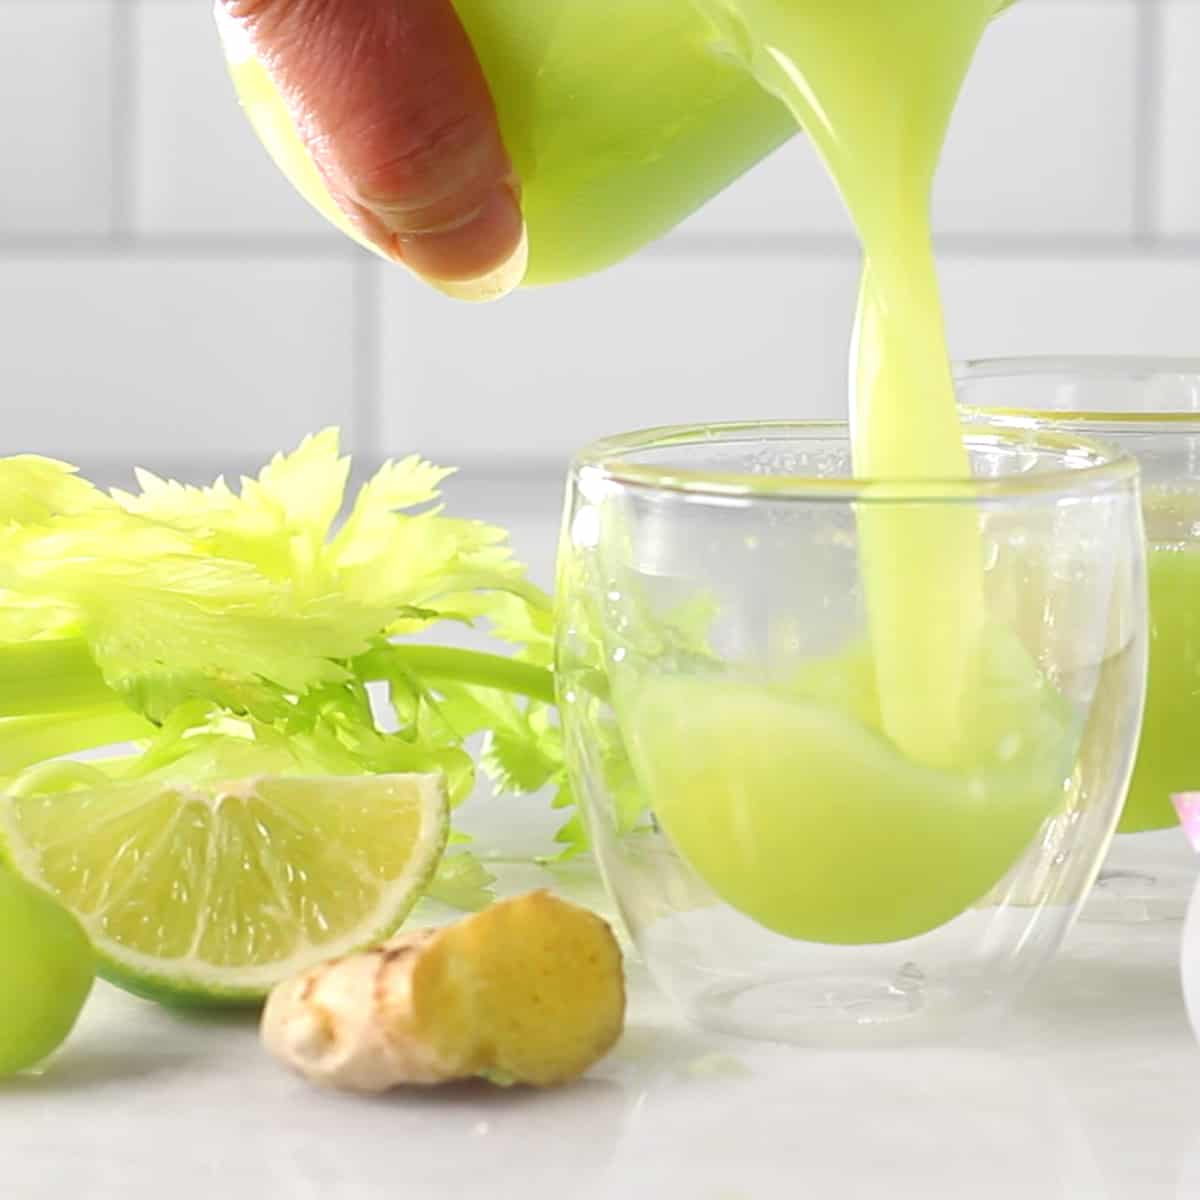 Celery and Lemon Juice Benefits